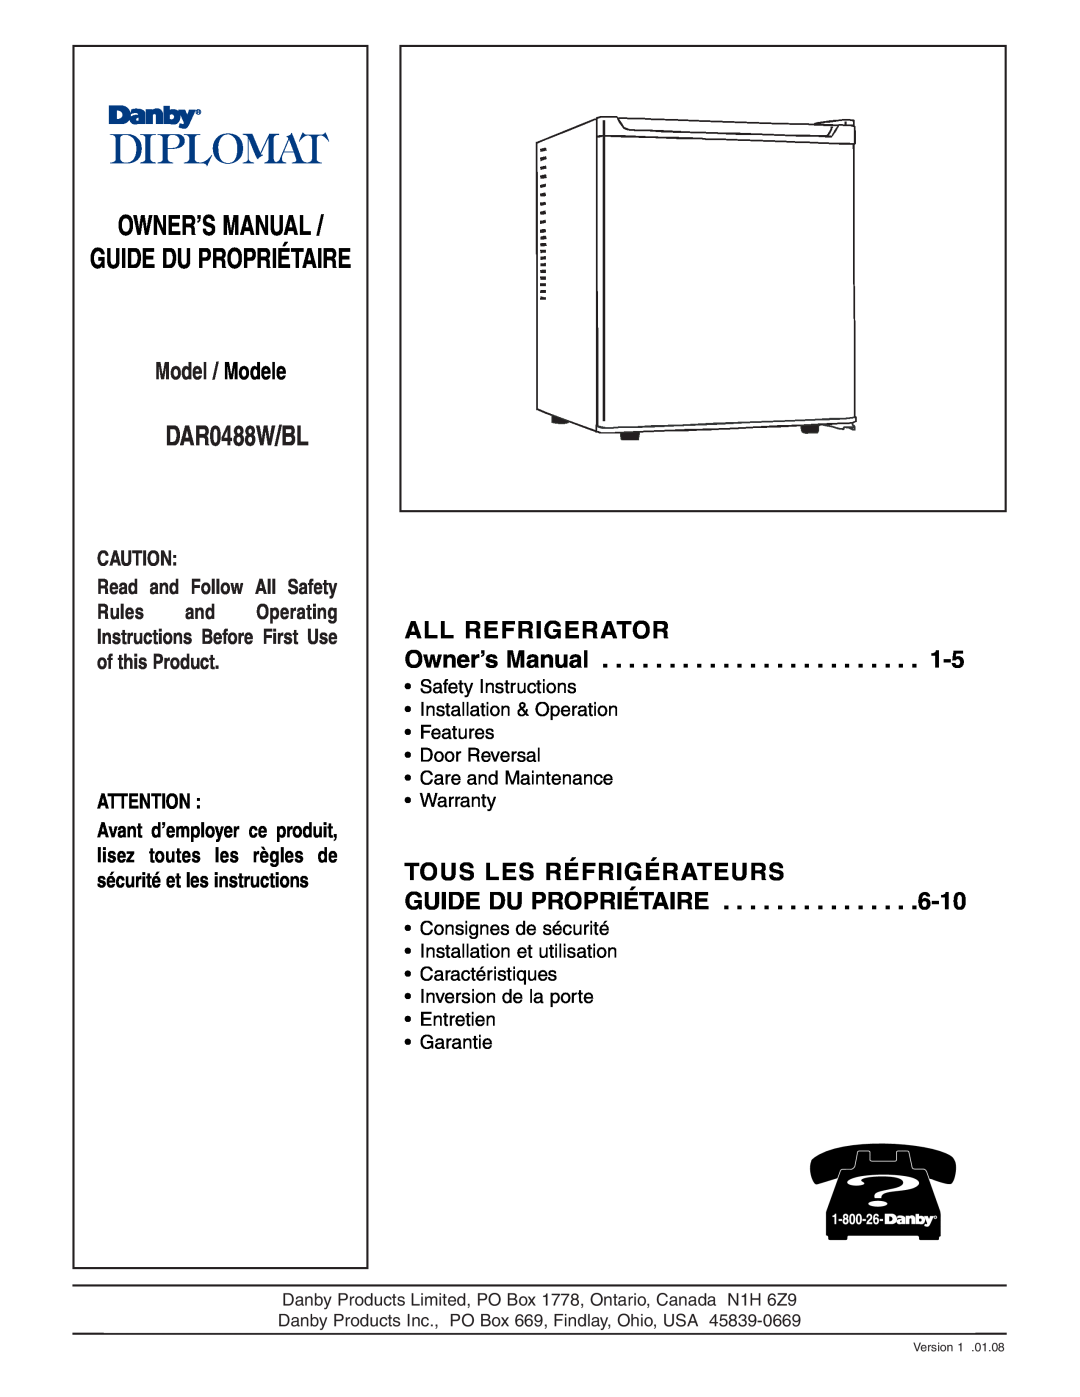 Danby DAR0488BL owner manual DAR0488W/BL, Guide Du Propriétaire, Model / Modele 